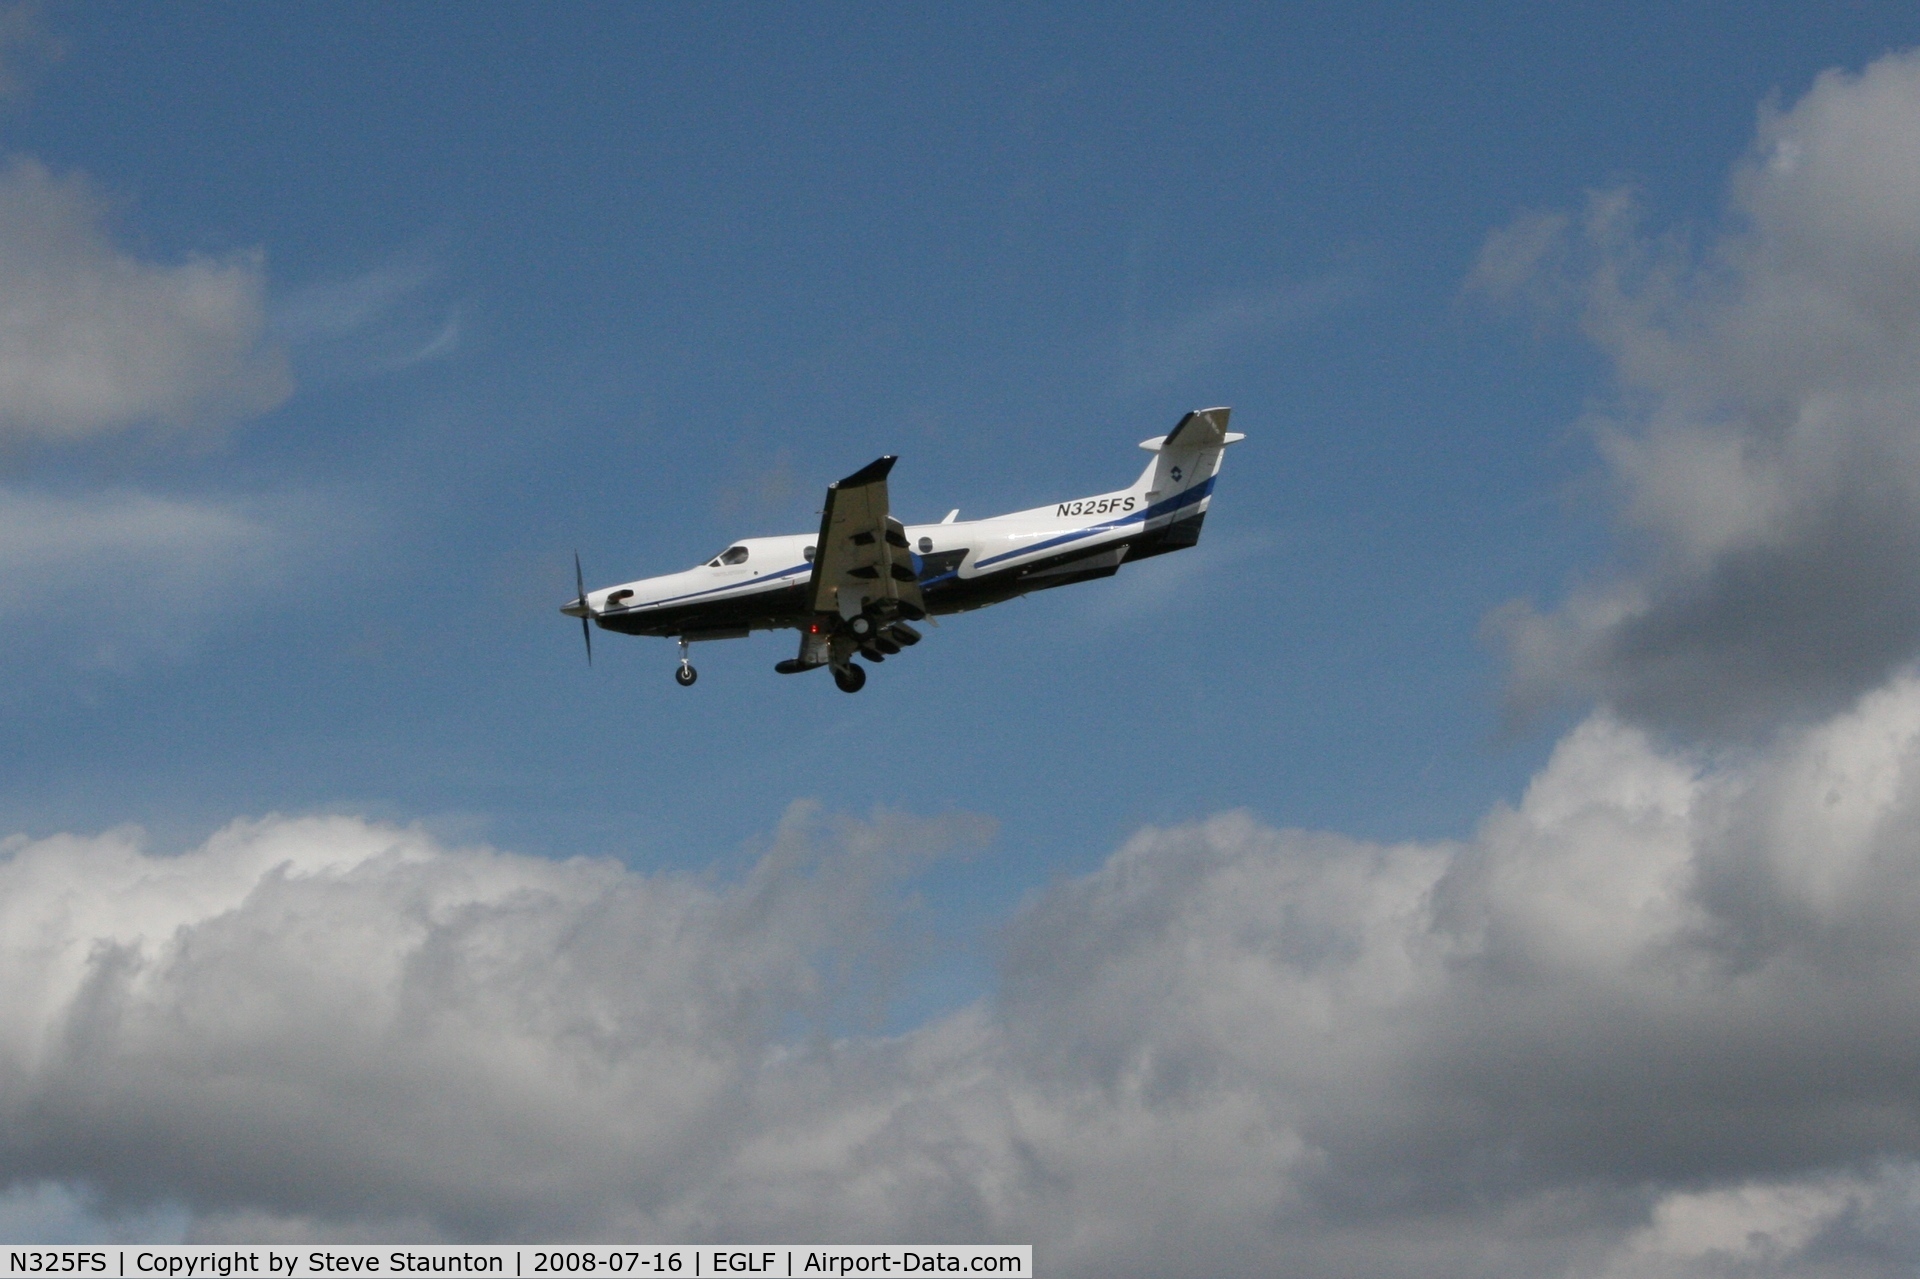 N325FS, 2006 Pilatus PC-12/47 C/N 746, Taken at Farnborough Airshow on the Wednesday trade day, 16th July 2008